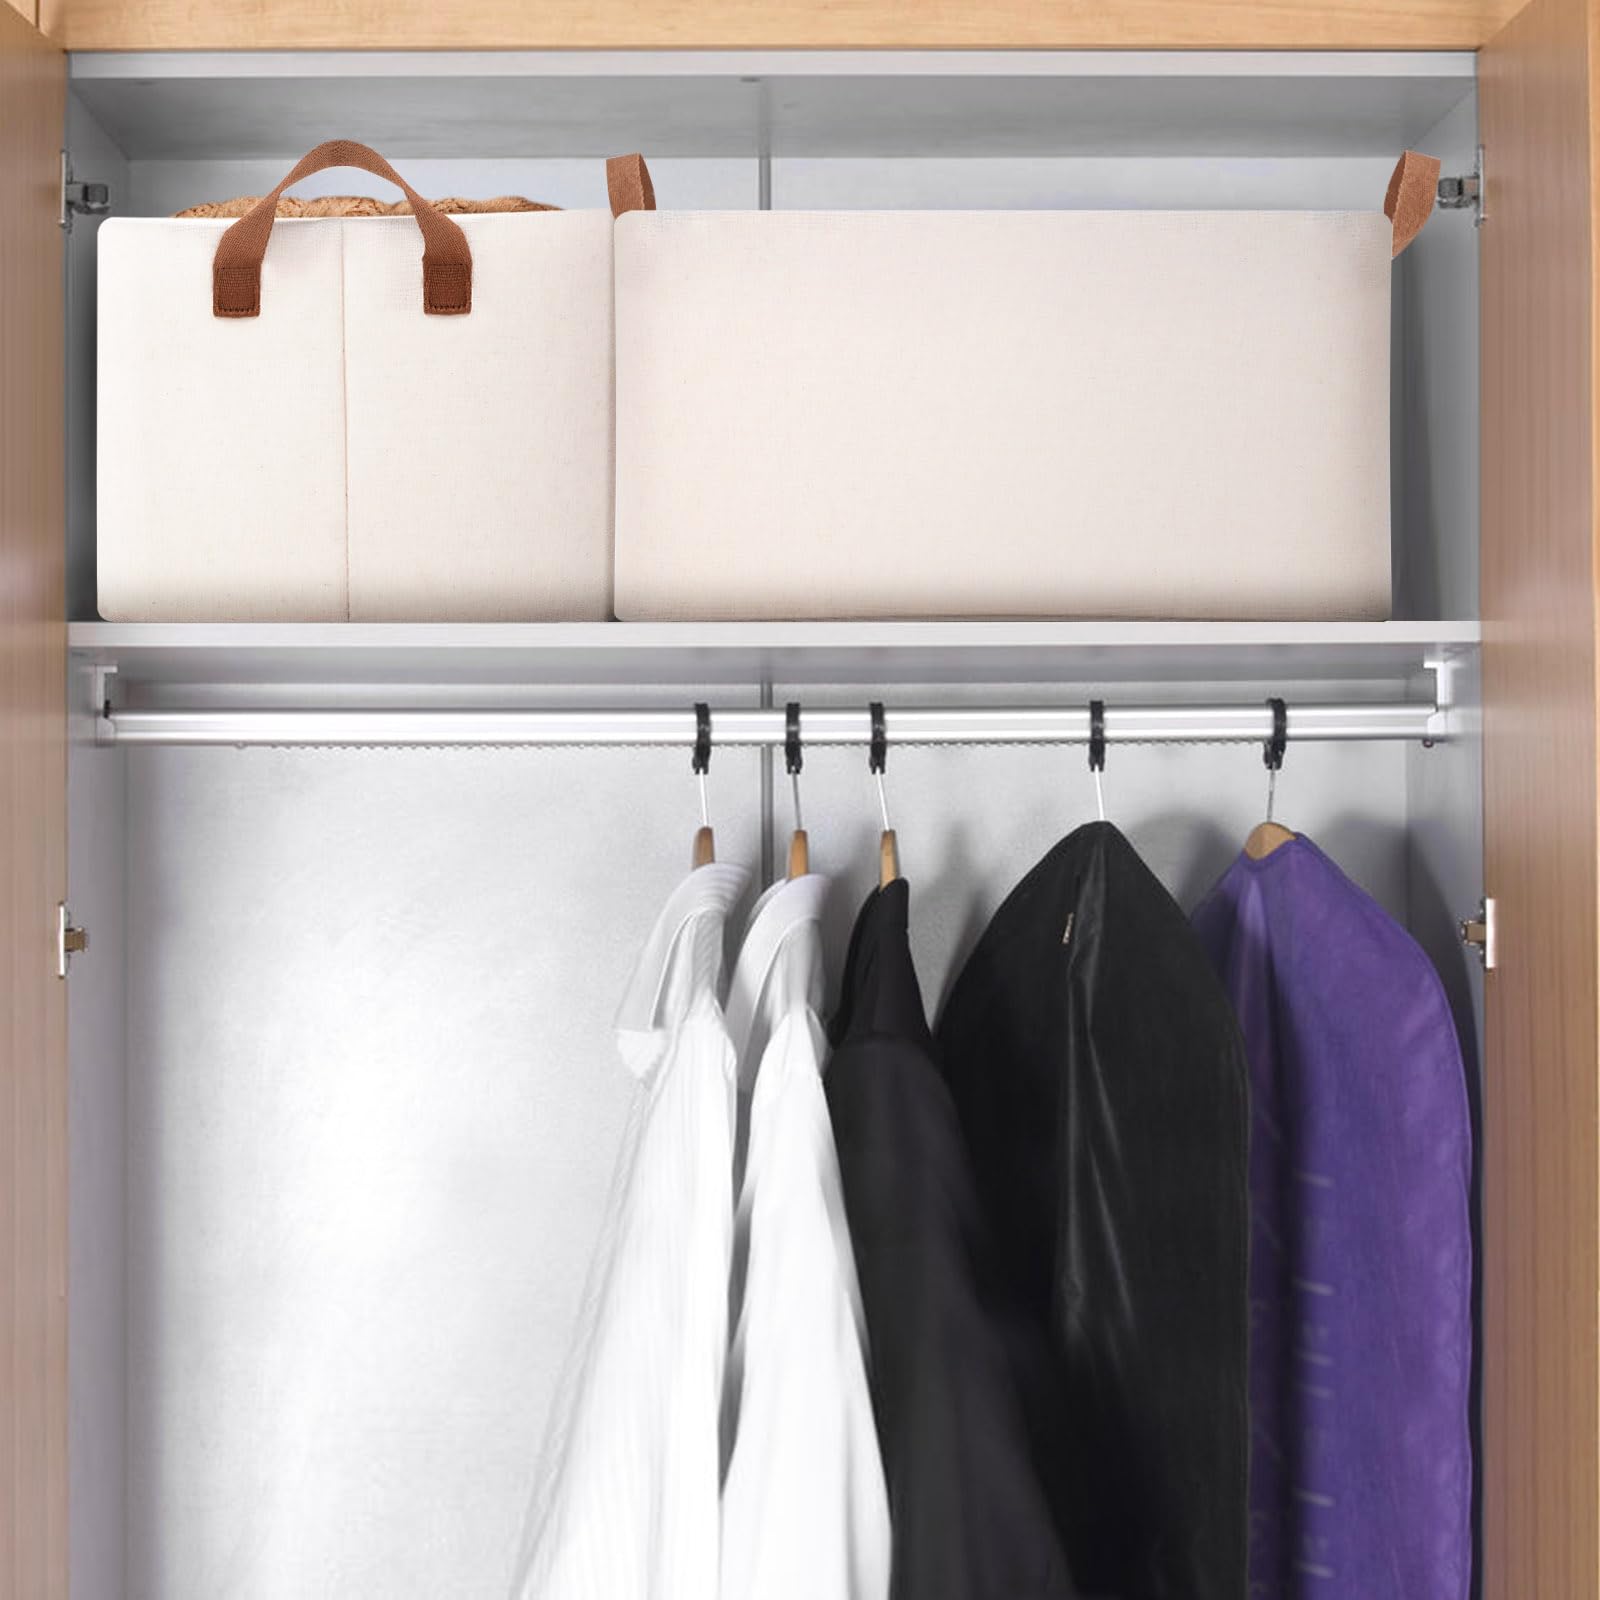 EEONDPU large storage baskets, closet storage bins, Canvas Fabric Storage Basket for shelves, basket organizers for shelf, storage bins for clothes (White 2 Pack, 16½"L×12" W×10" H)